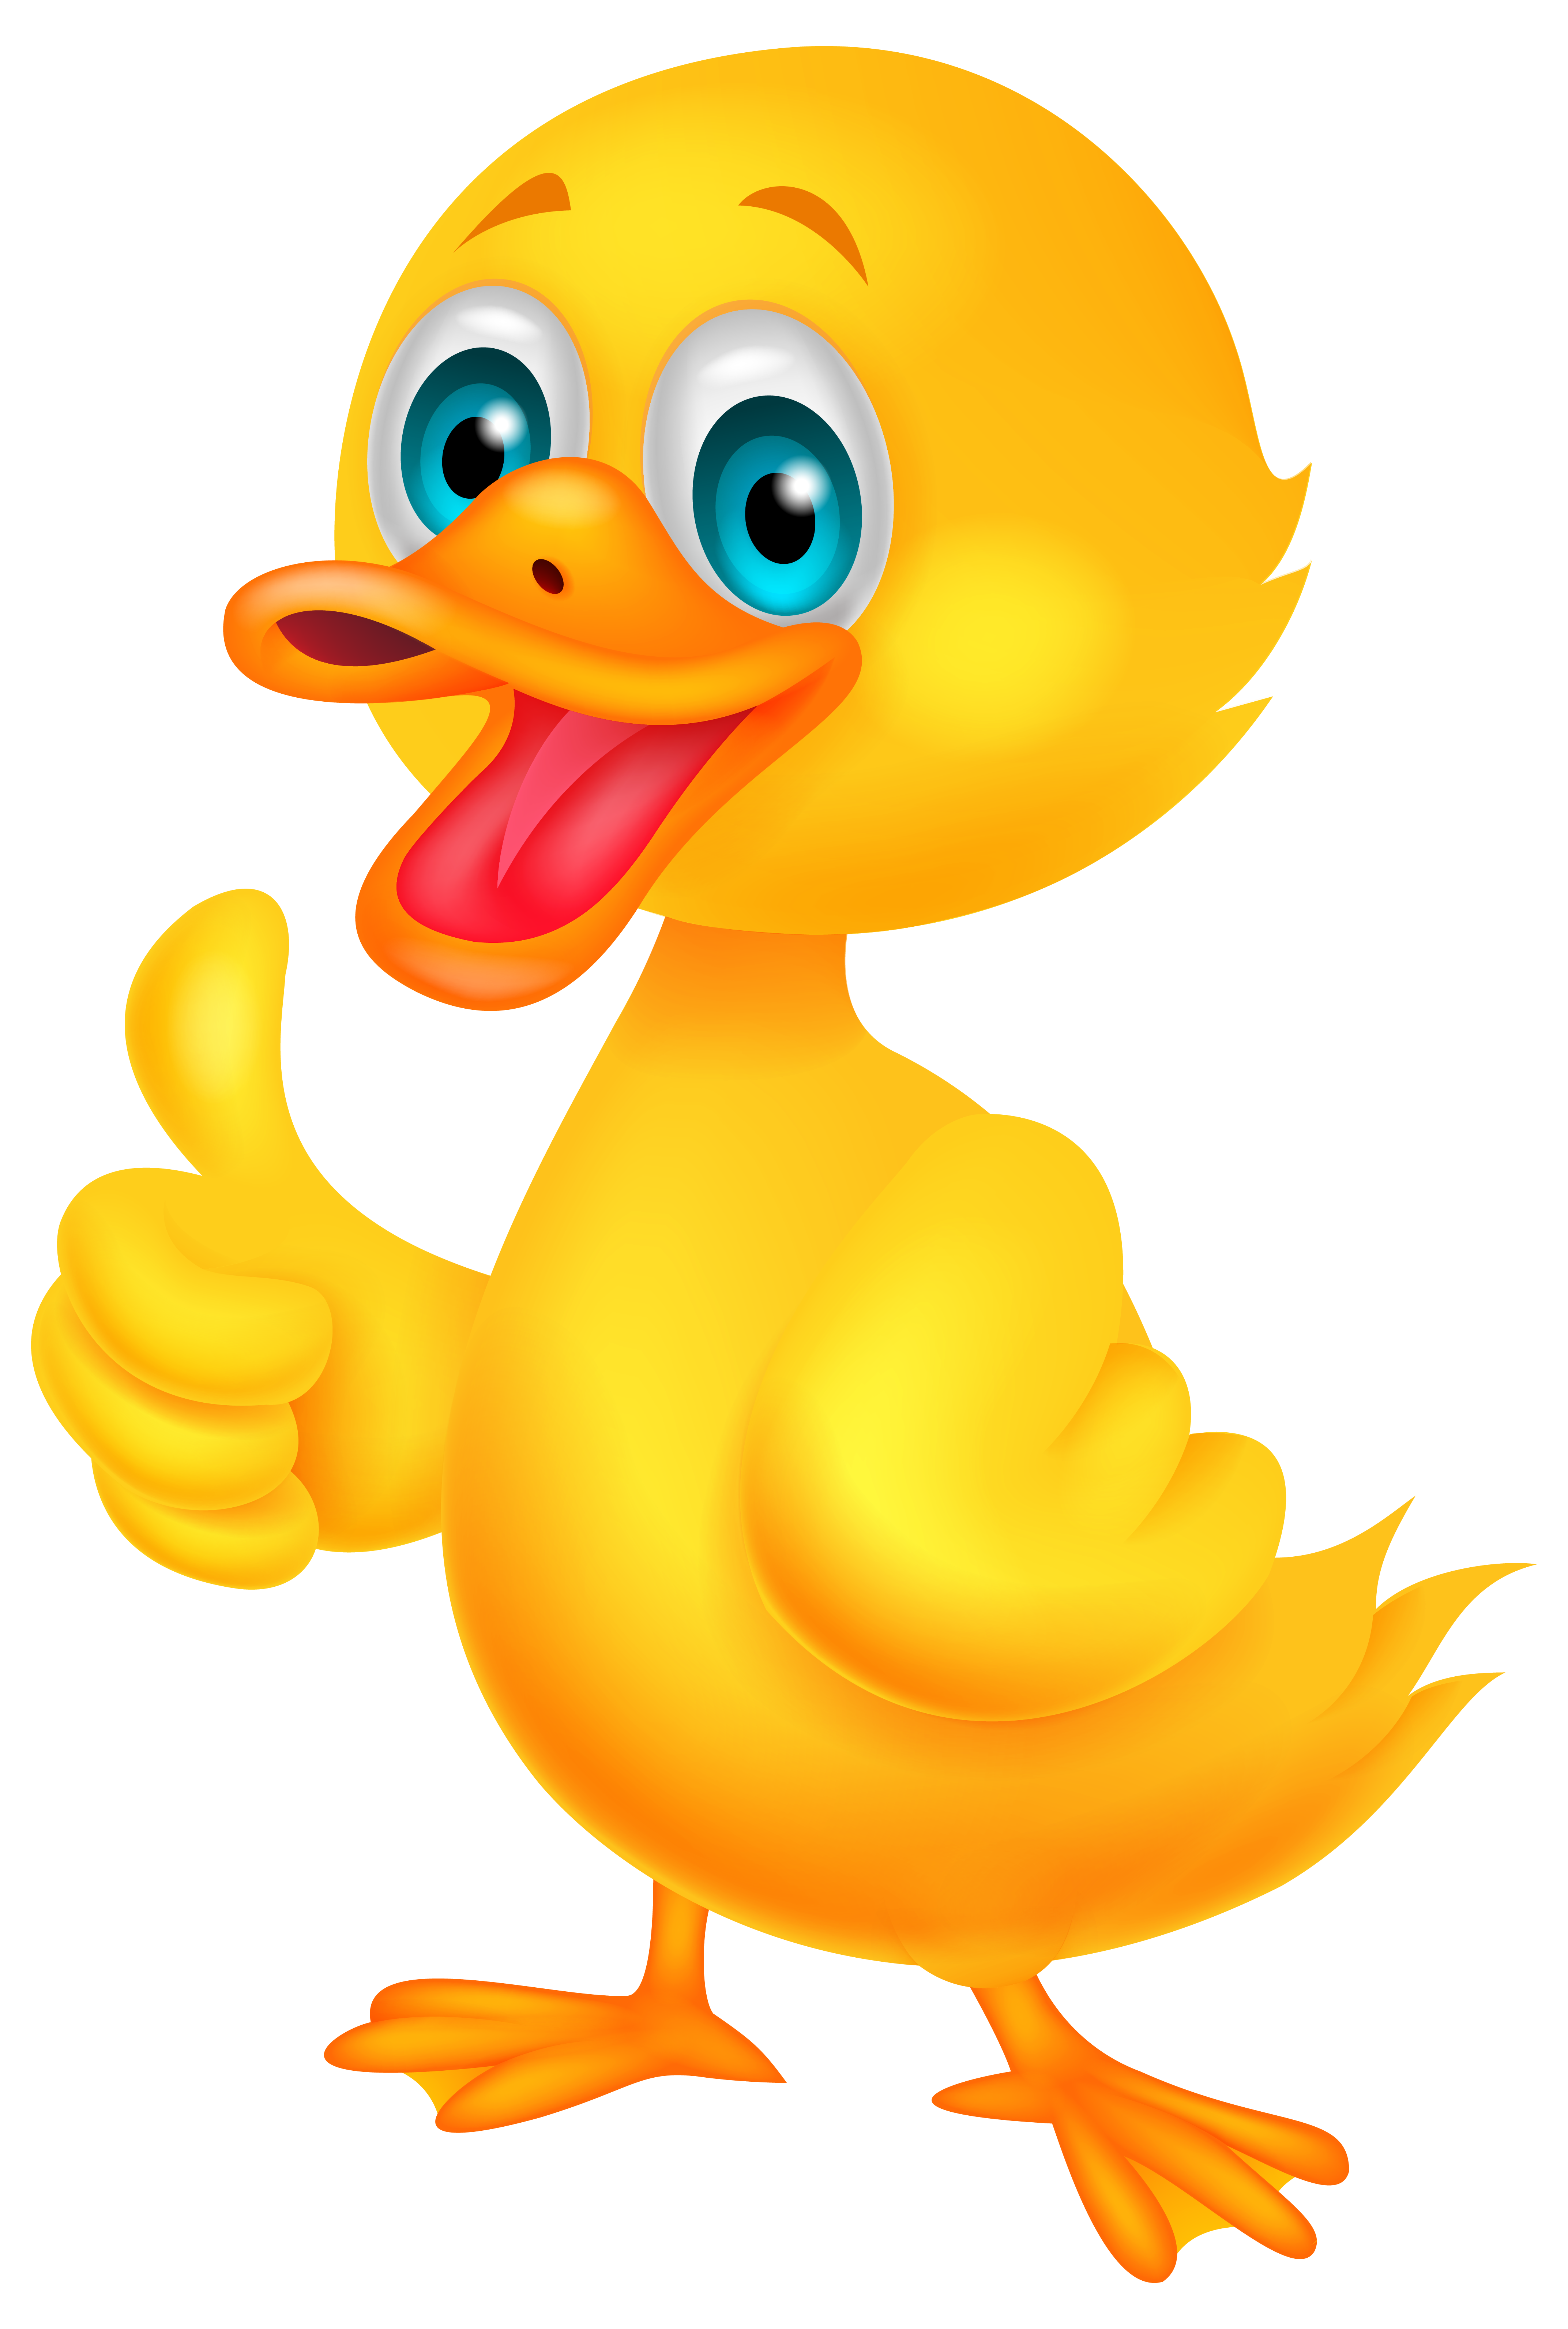 Duck clip art image - Clipartix